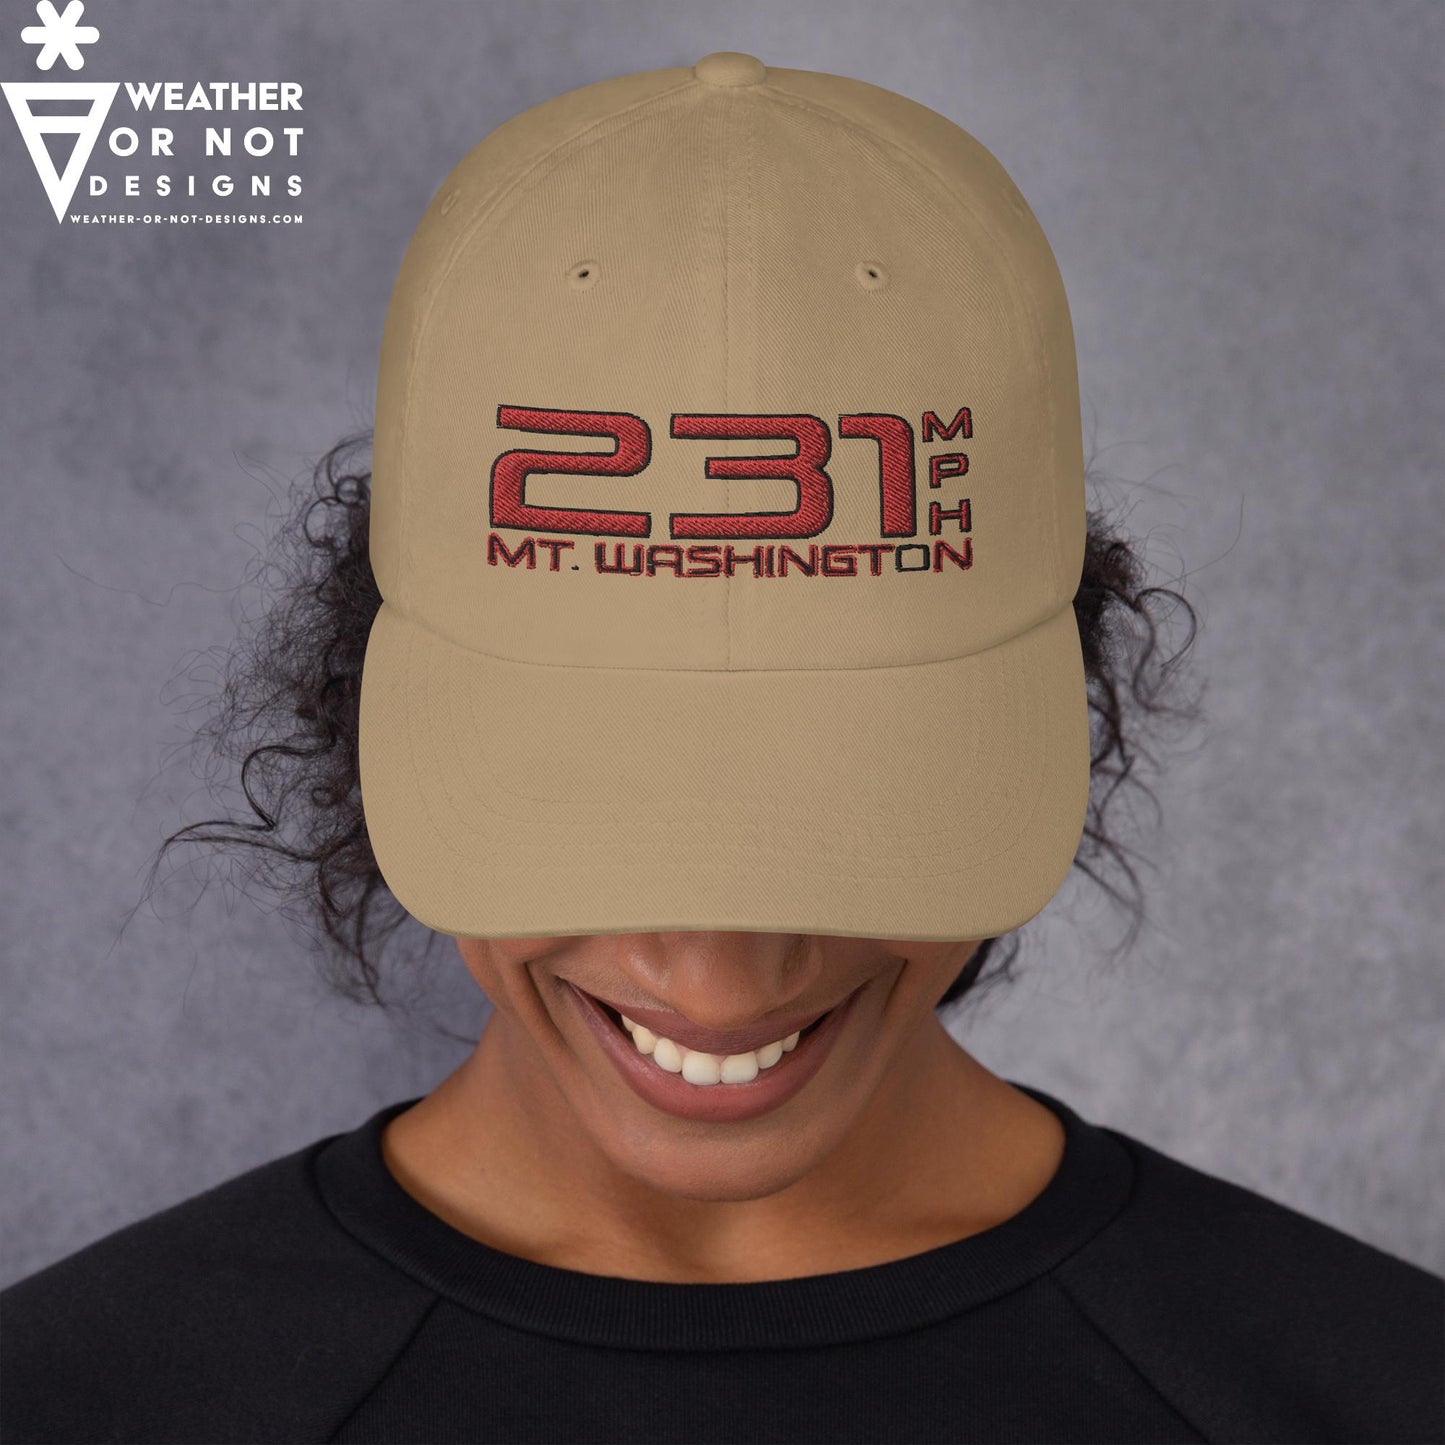 231 MPH WIND MT WASHINGTON hat